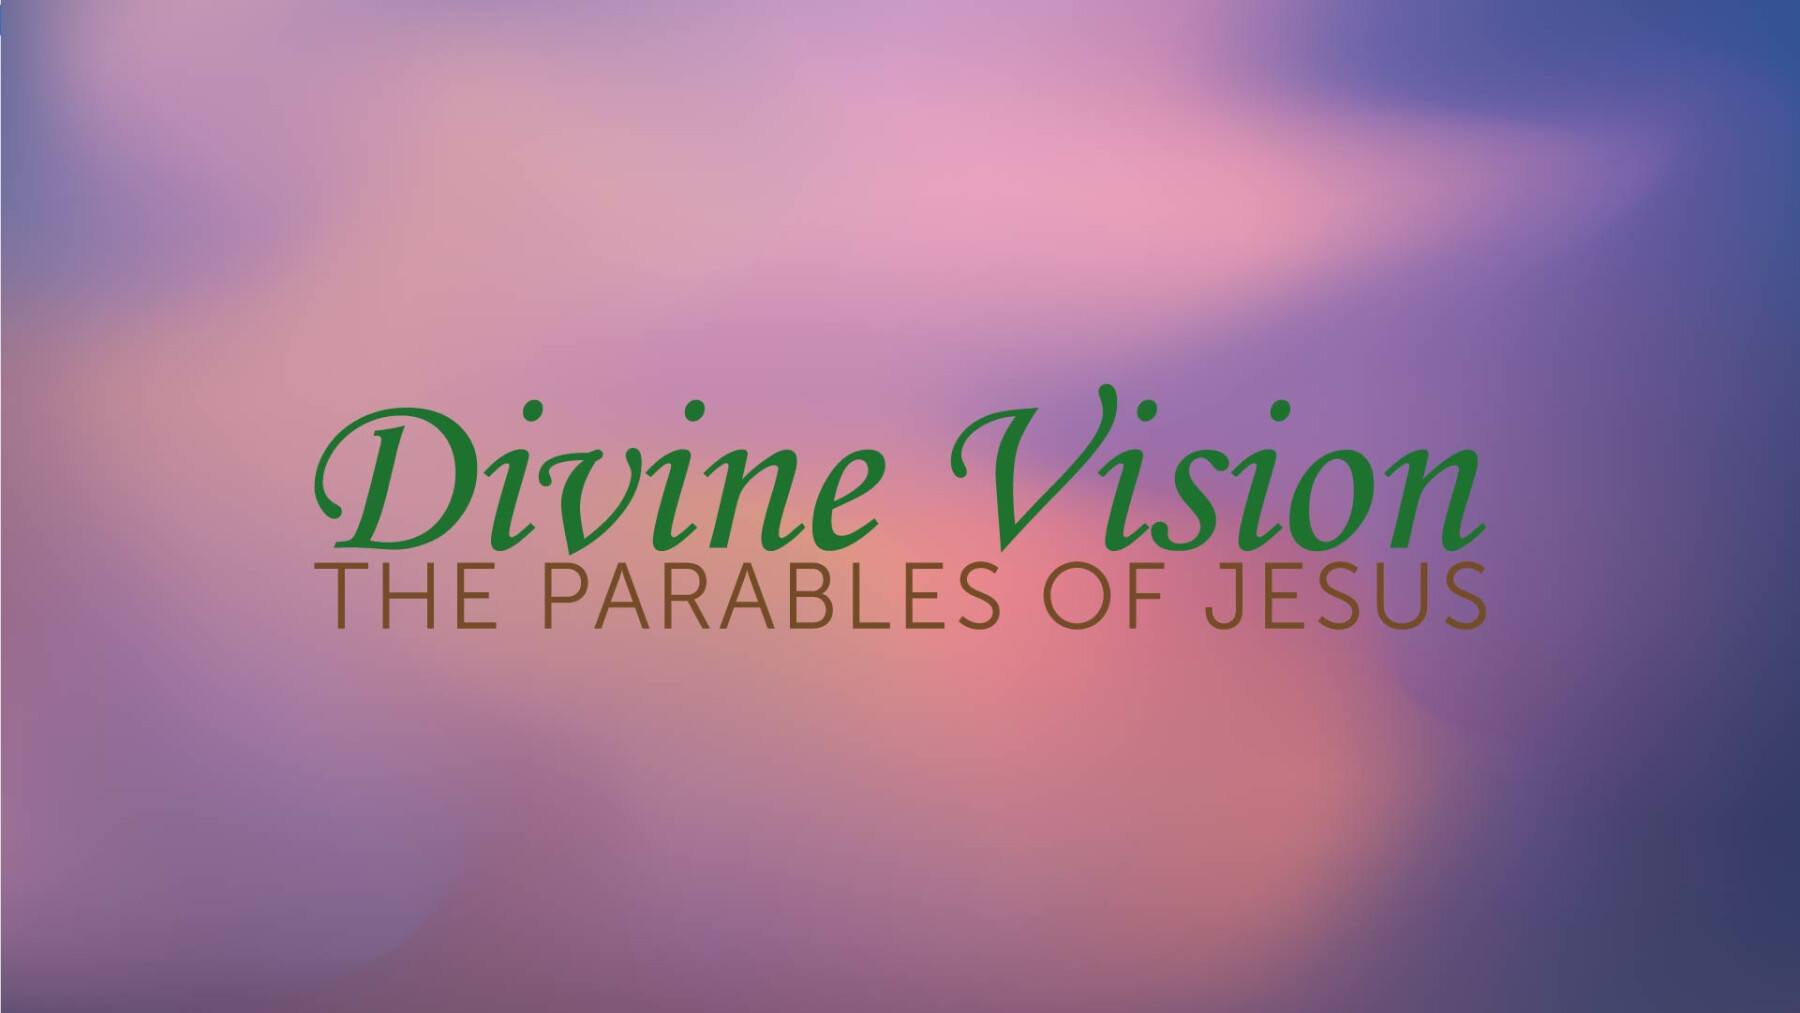 Divine Vision: The Parables of Jesus